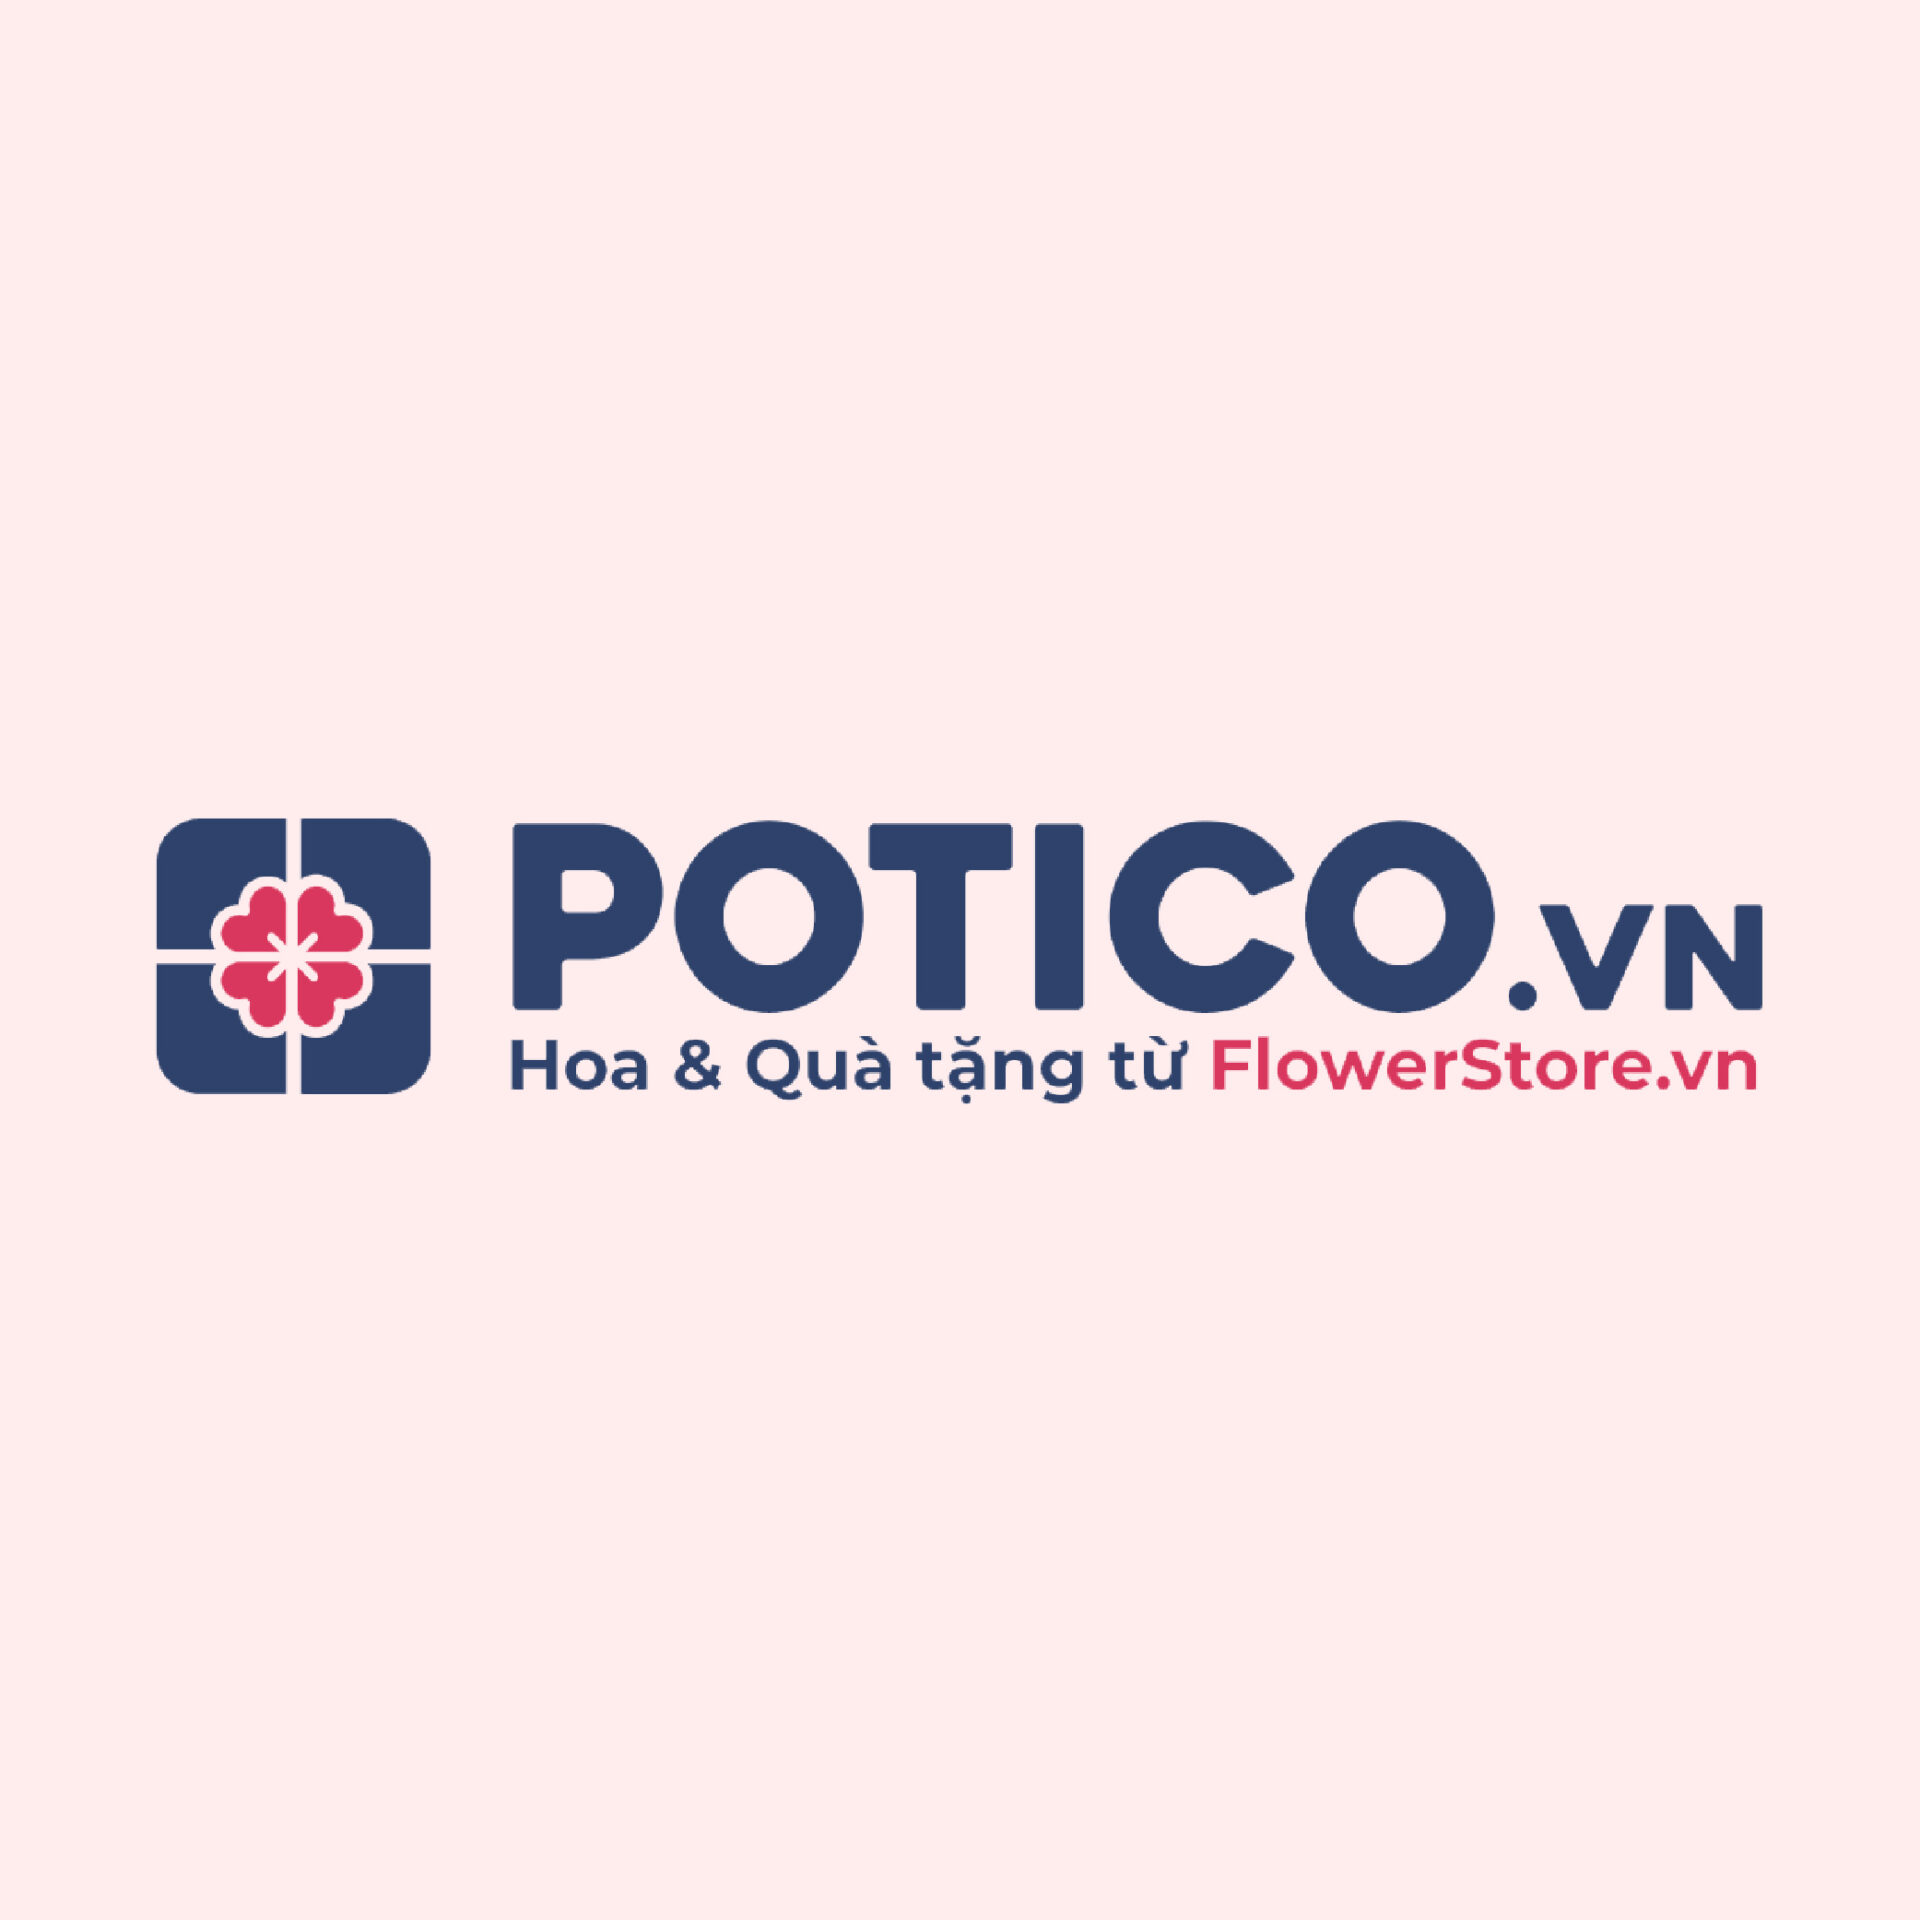 Potico FlowerStore logo 02 scaled